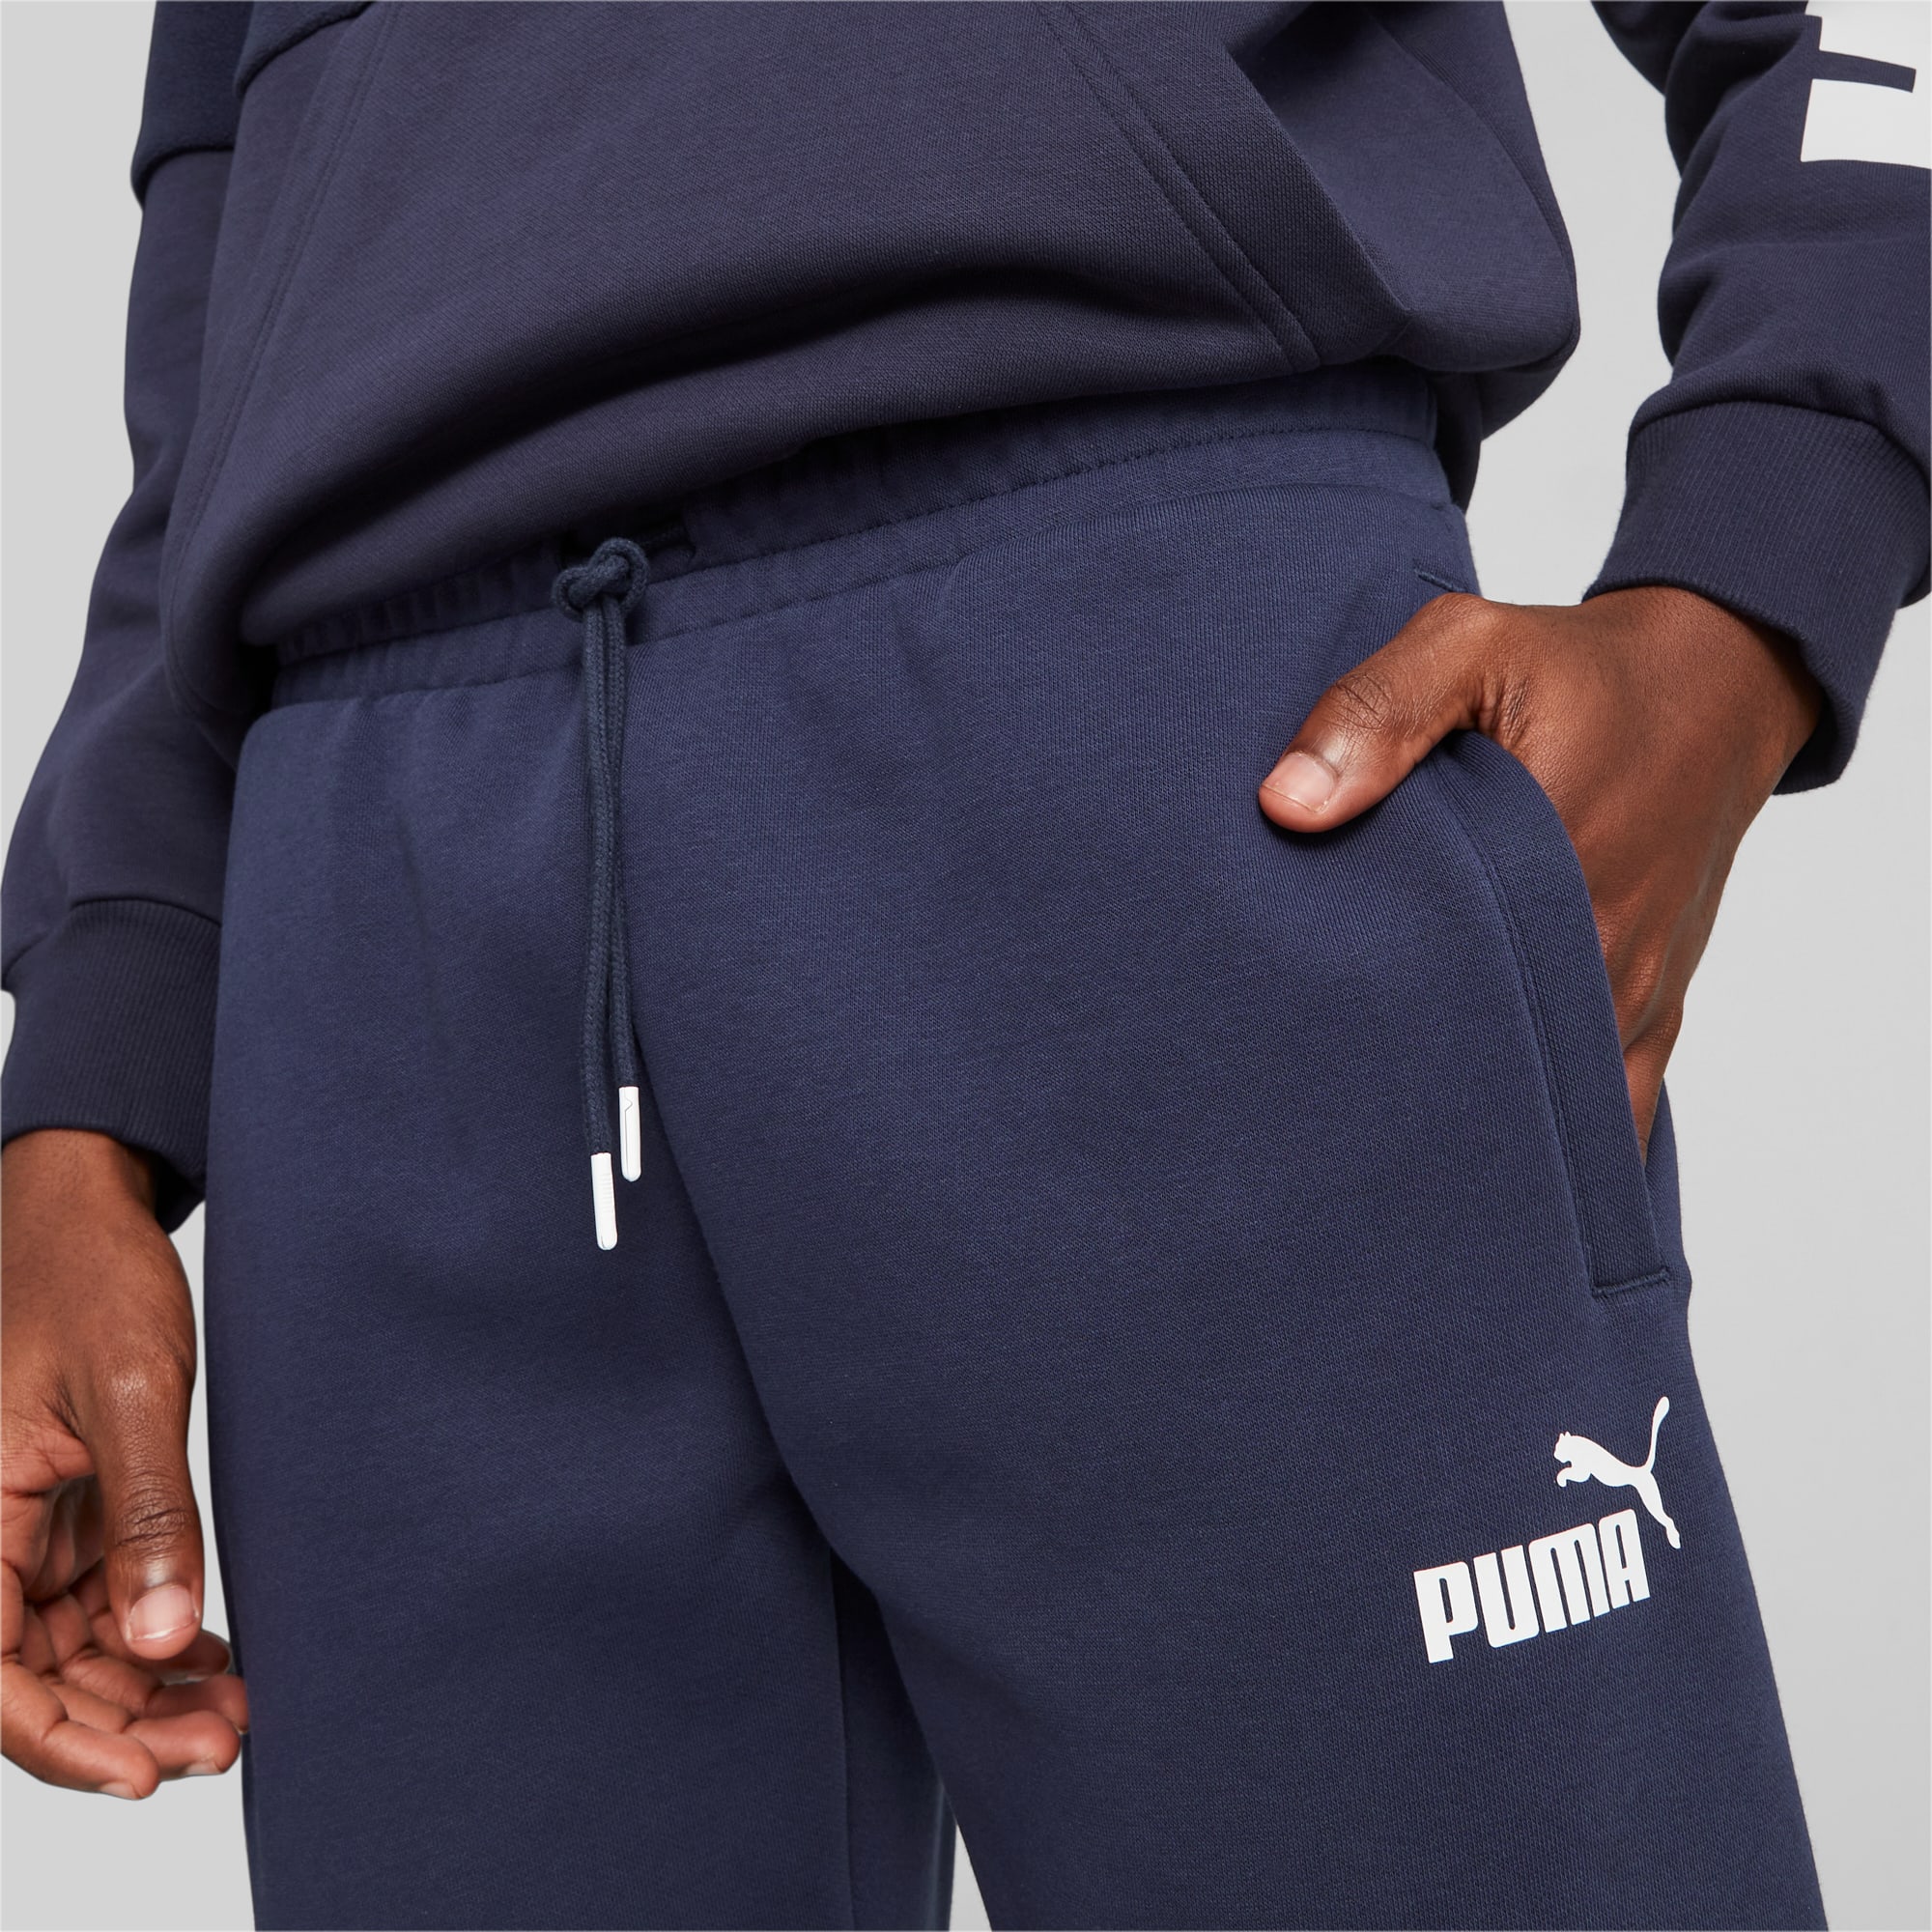 PUMA Power Men's Sweatpants, Dark Blue